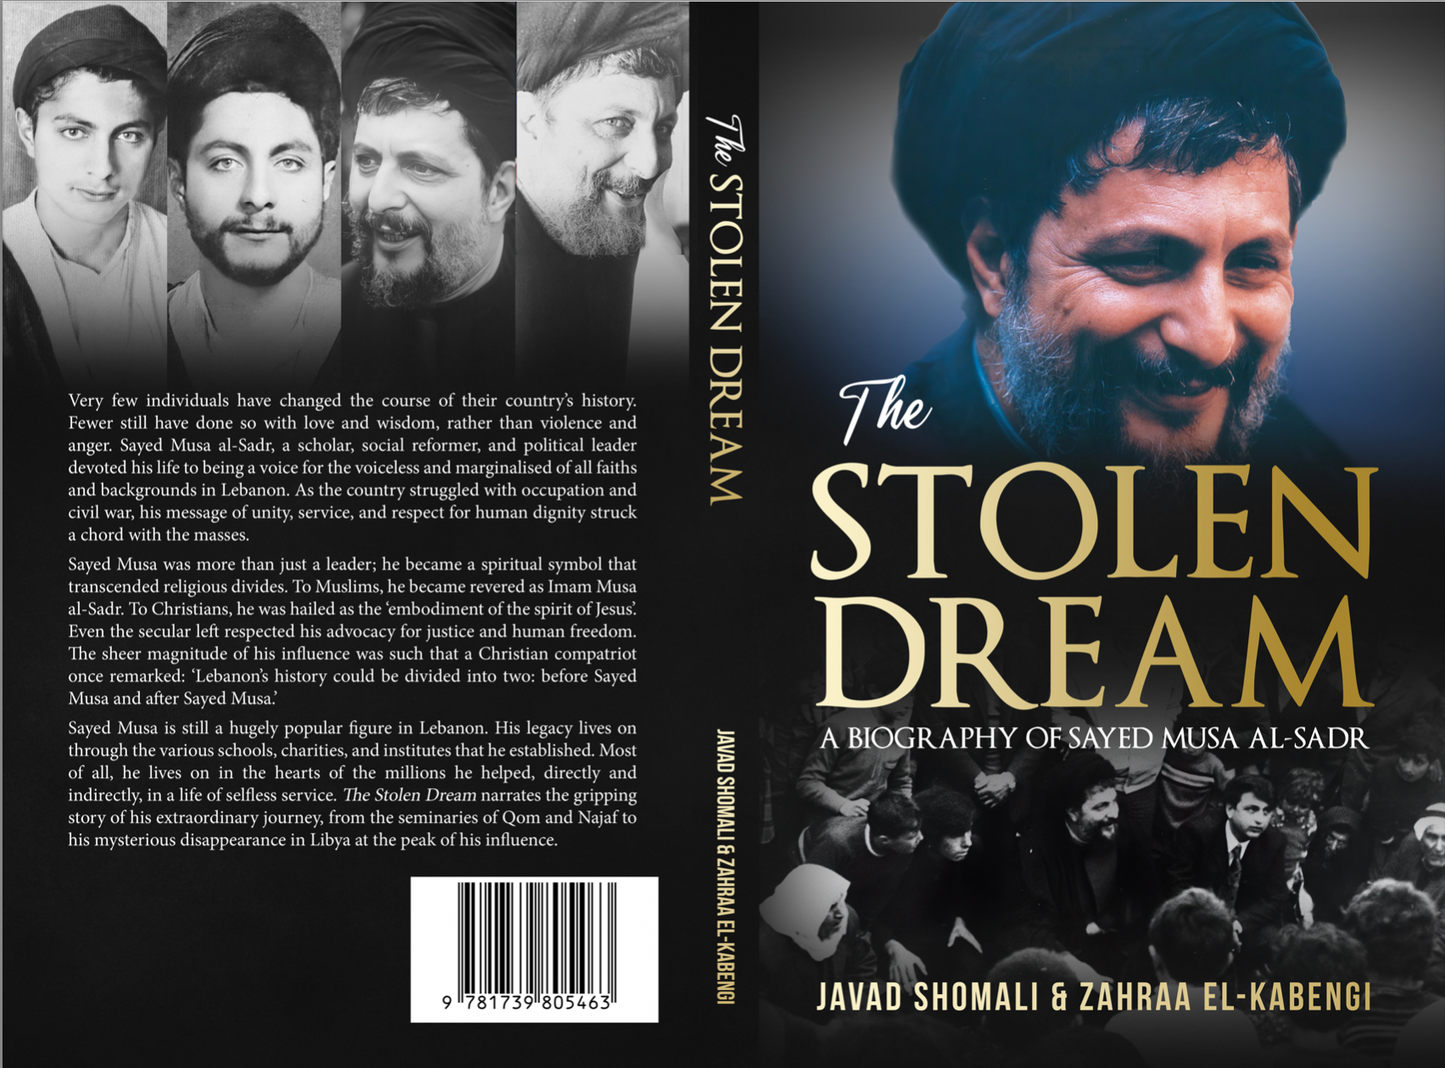 The Stolen Dream | A Biography of Sayed Musa al-Sadr